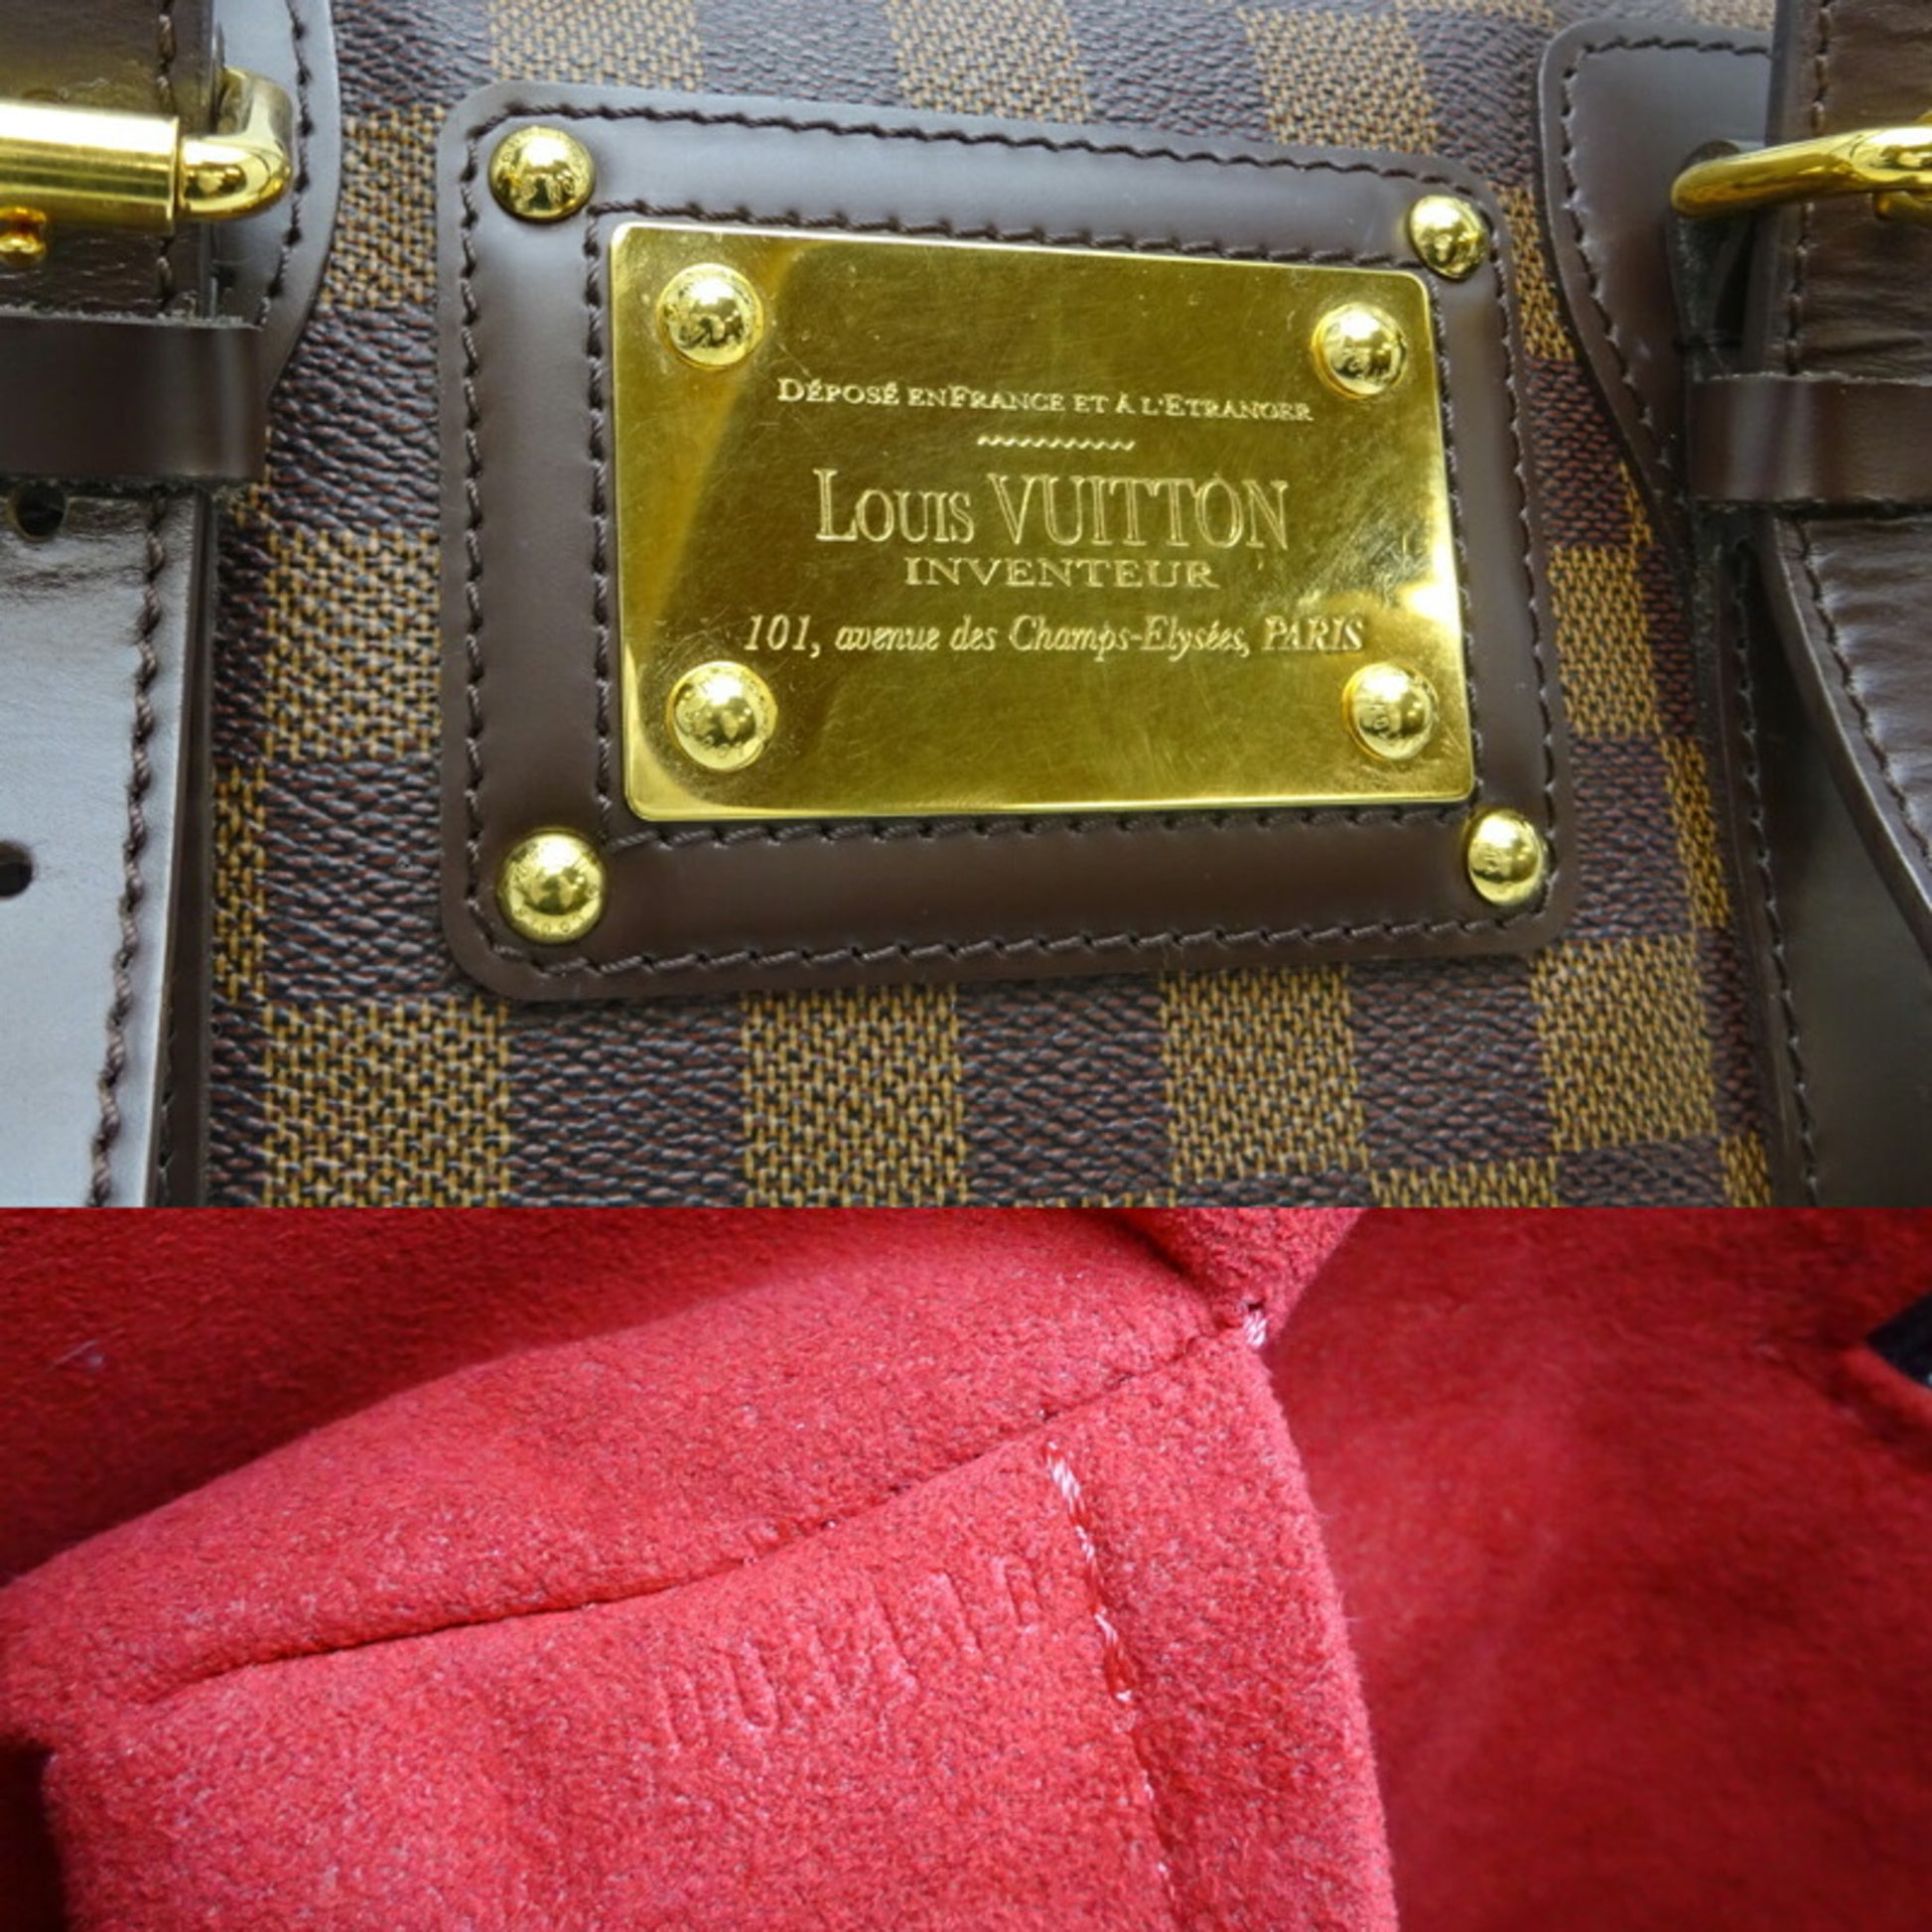 LOUIS VUITTON Berkeley Handbag Plate Damier Ebene N52000